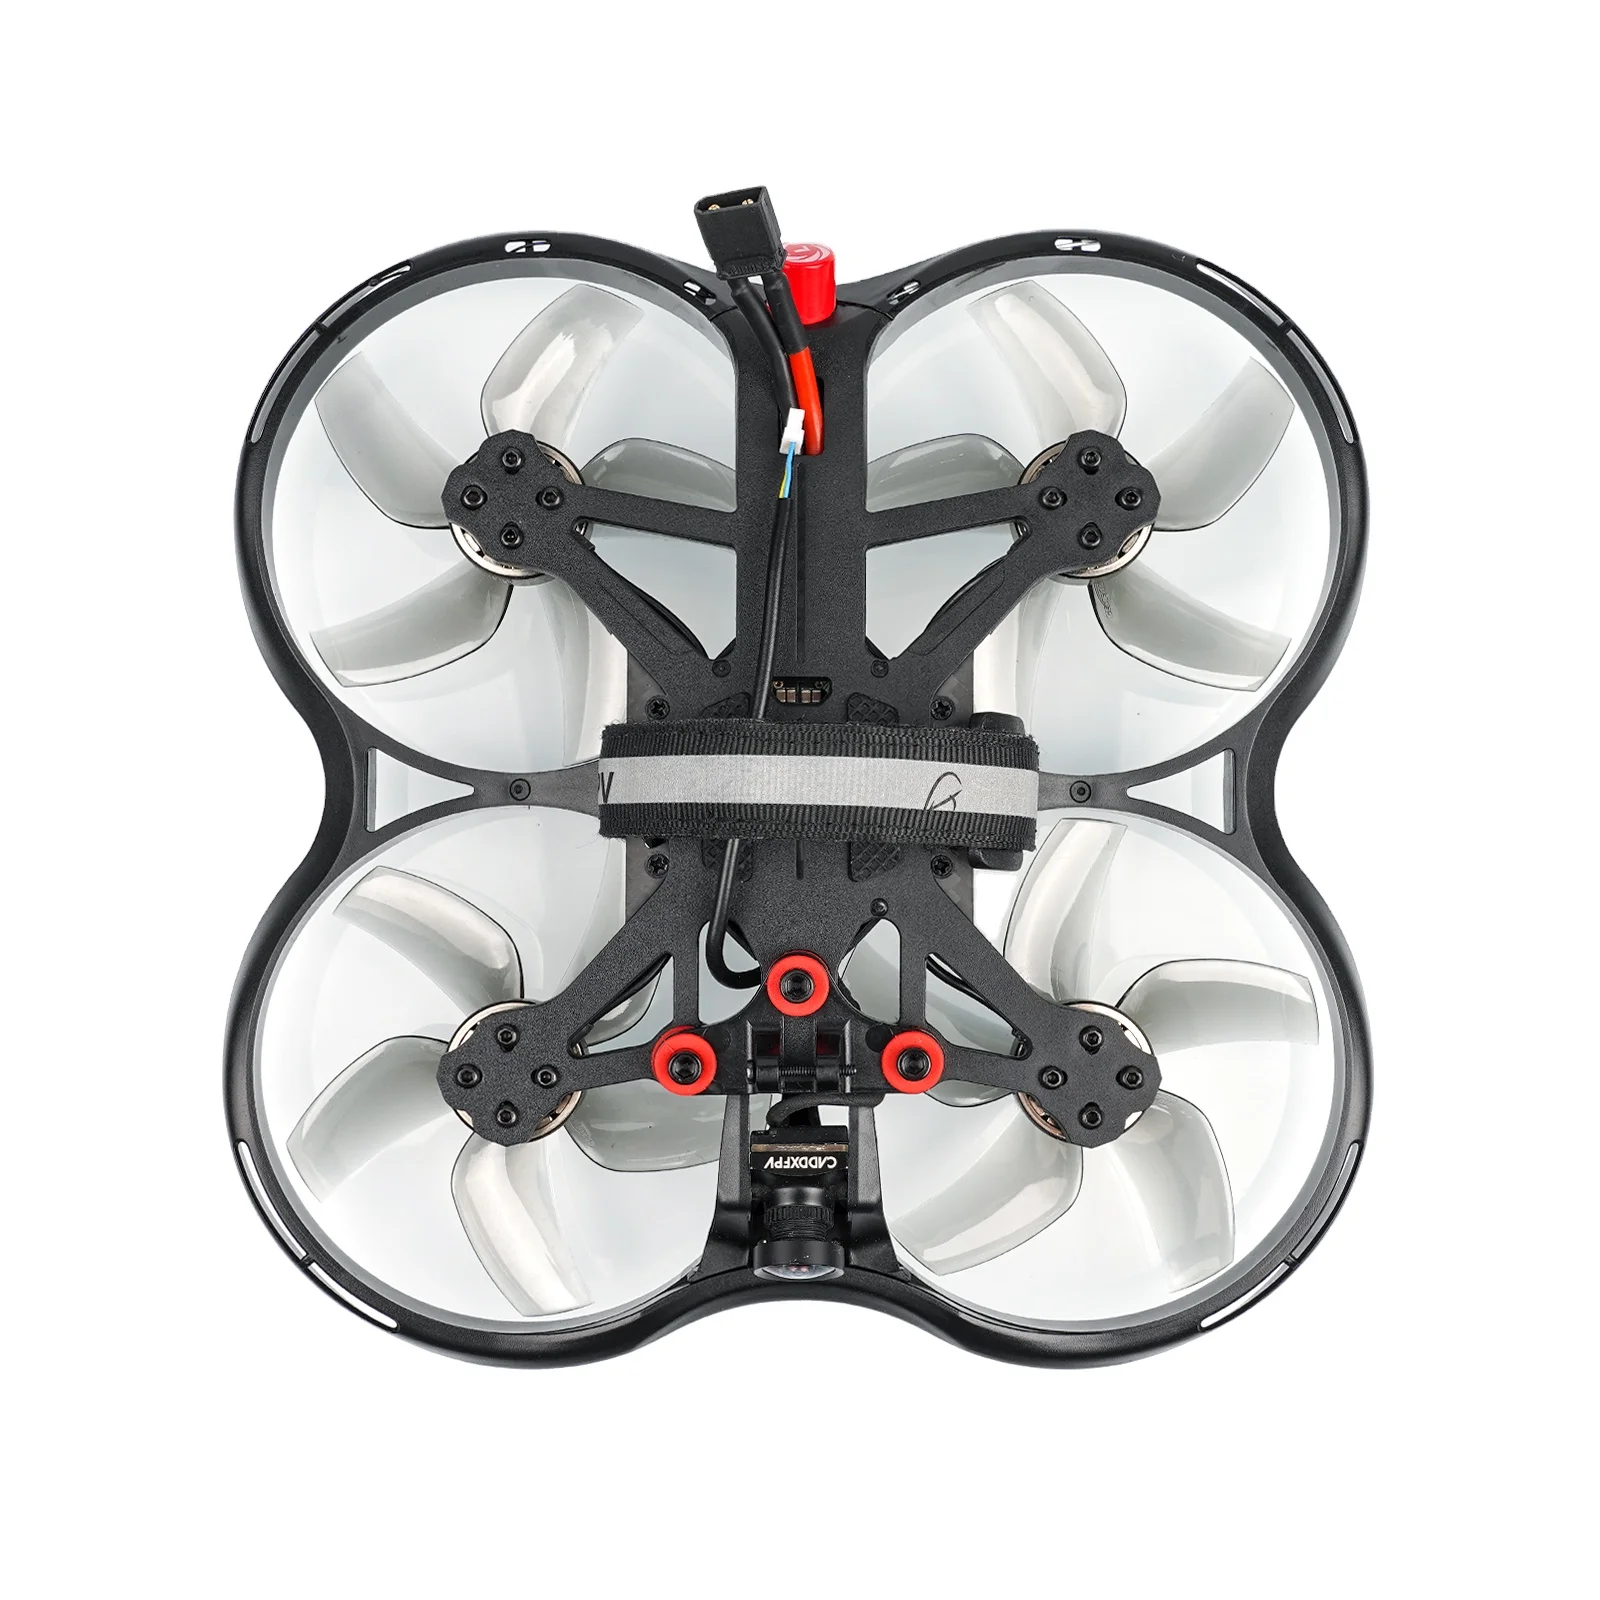 Betafpv Pavo 30 Hd Digital Vtx Quadcopter Fpv Drone-professionnel 4k Hd  Mini Drones With 4k Camera And Gps - Buy Drone Fpv,Drones With 4k Camera  And Gps,Drone-professionnel 4k Product on Alibaba.com